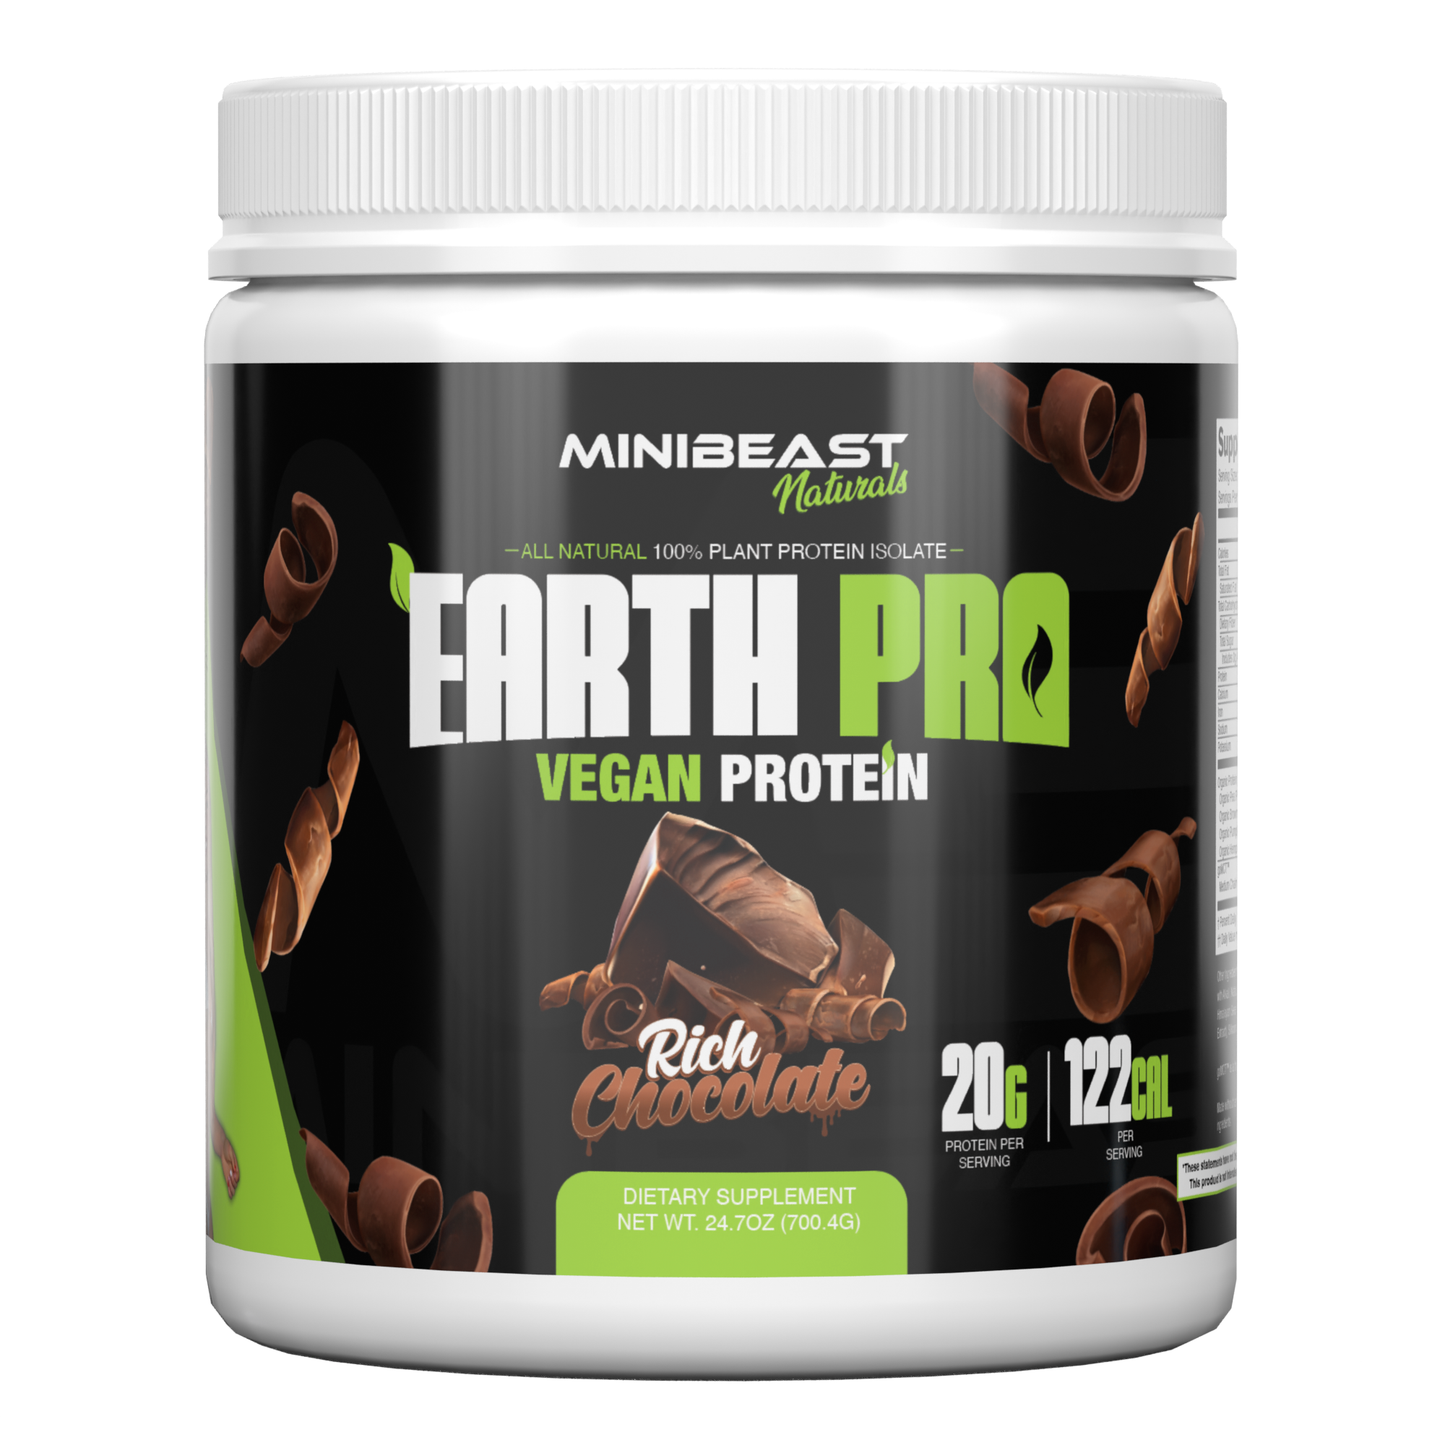 Earth Pro Vegan Protein